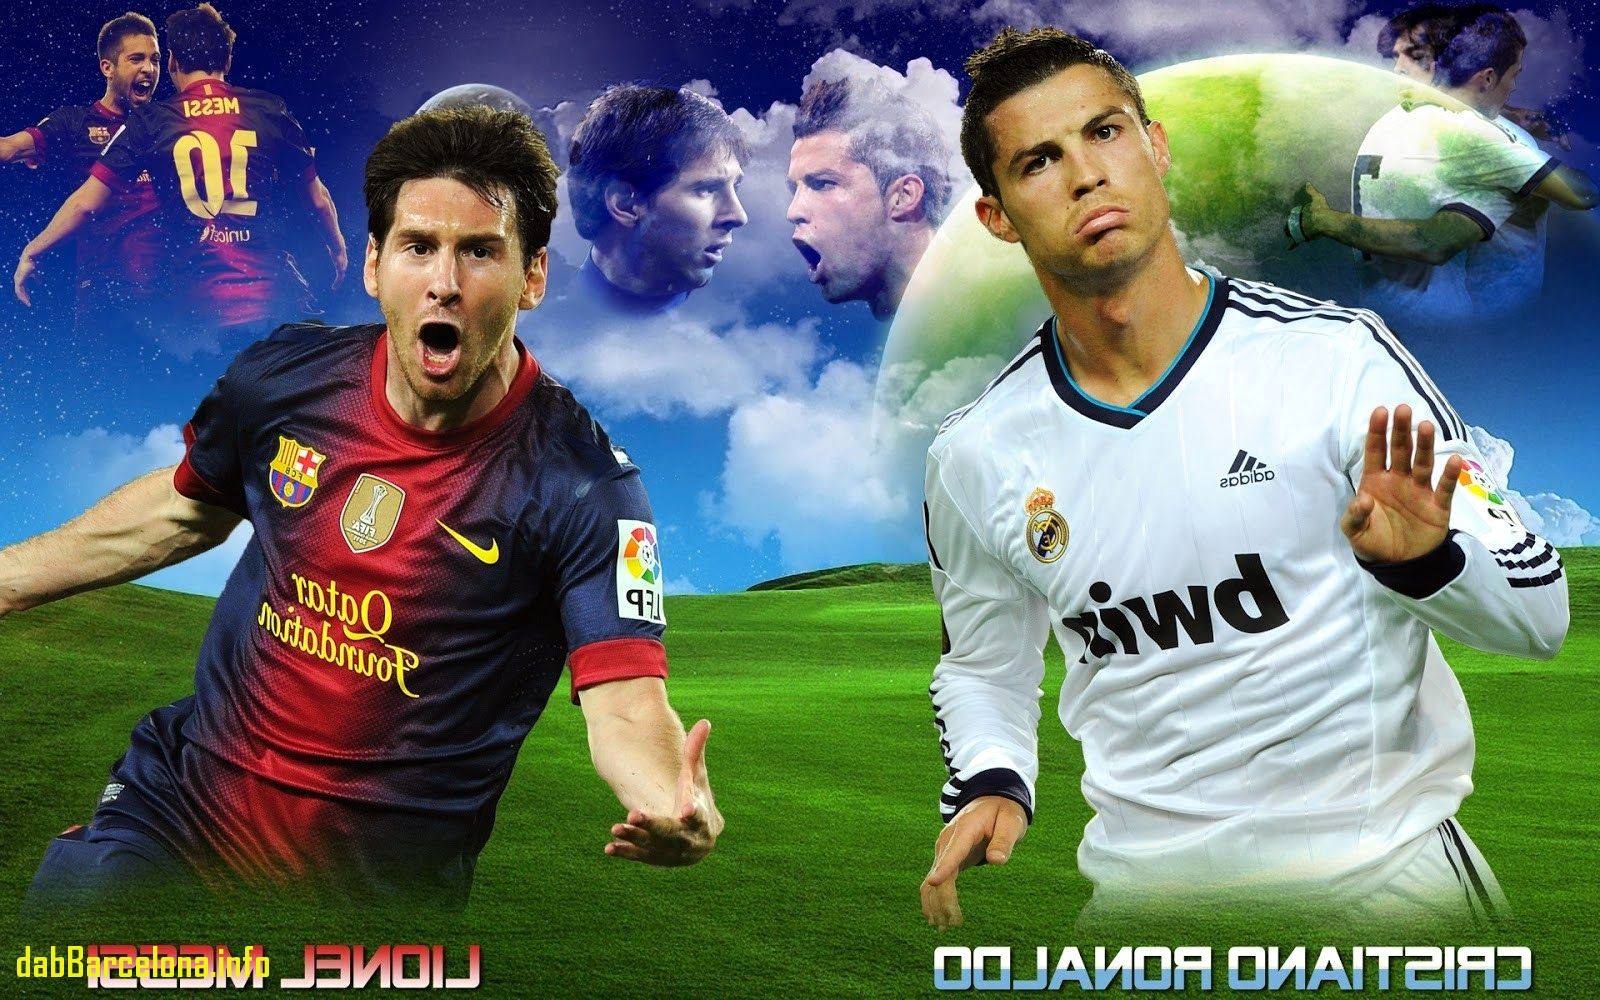 Cristiano Ronaldo Vs Messi 2014 Wallpapers Images Festival - Republic Day India 2012 - HD Wallpaper 